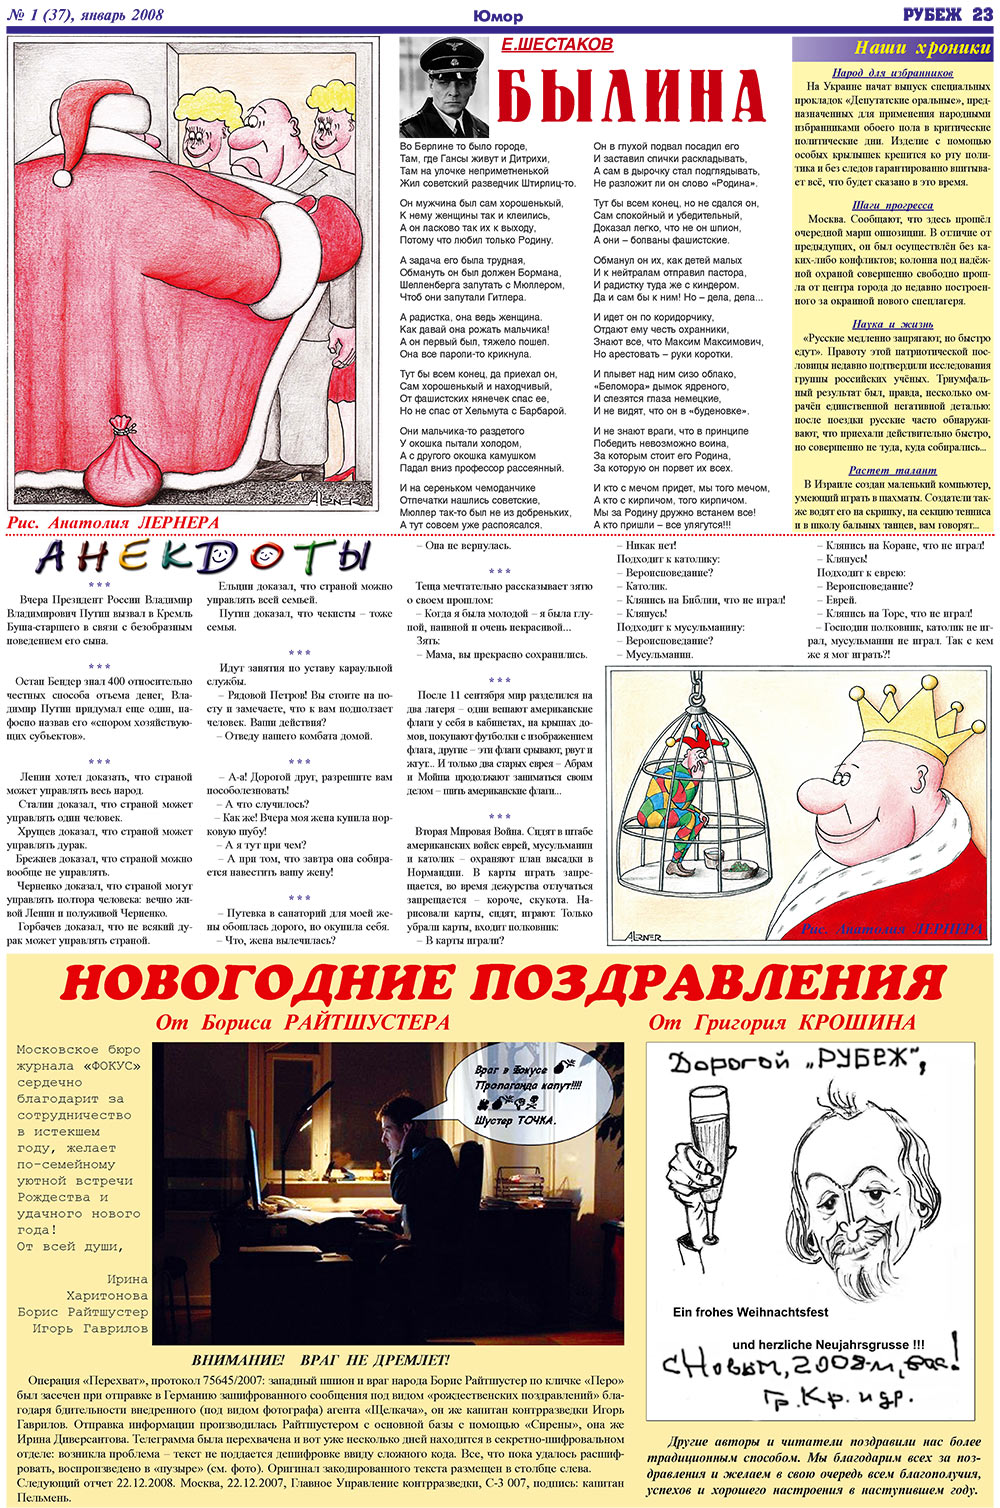 Рубеж, газета. 2008 №1 стр.23